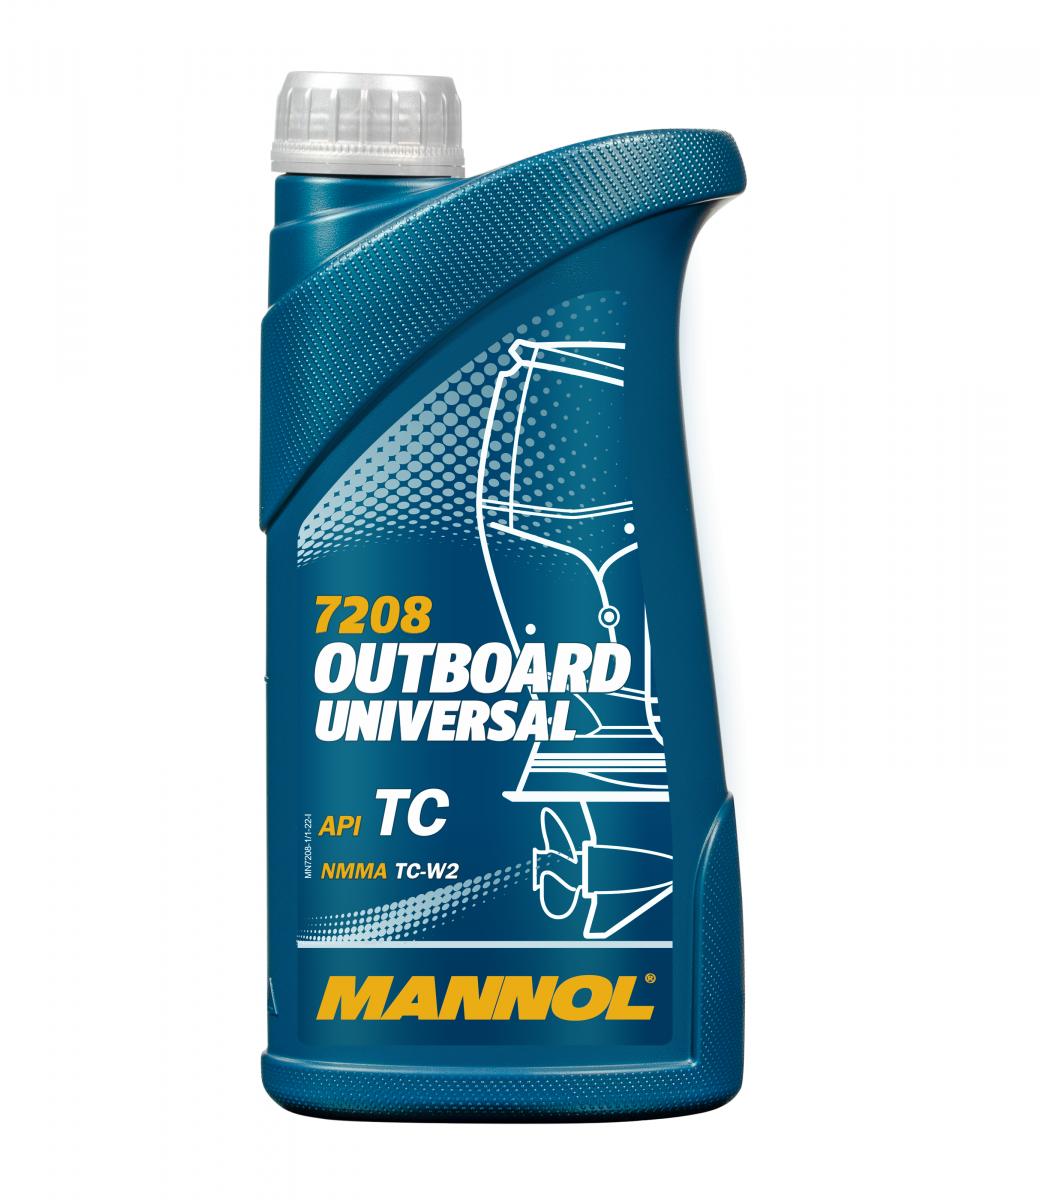 3 Liter (3x1) MANNOL Outboard Universal API TC Motoröl Außenbordmotoröl